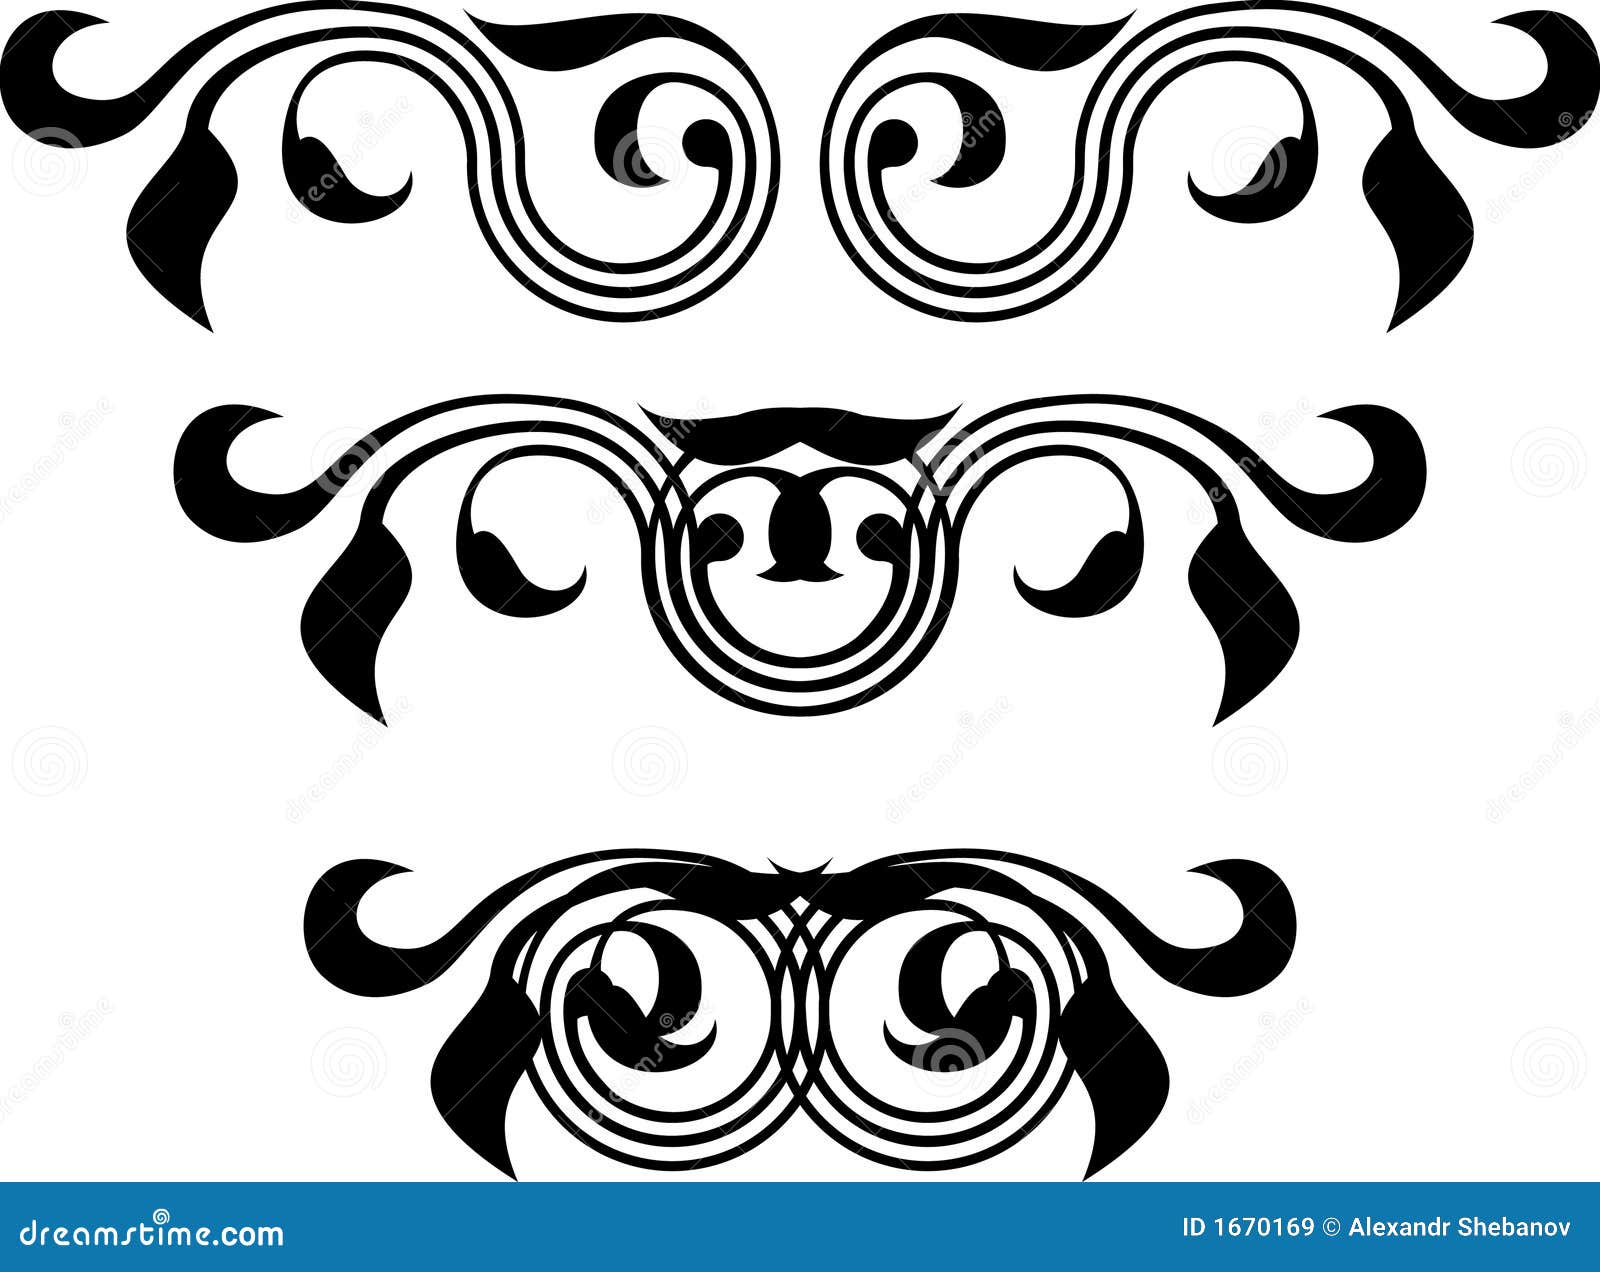 Scroll design stock vector. Illustration of gothic, filigree - 1670169